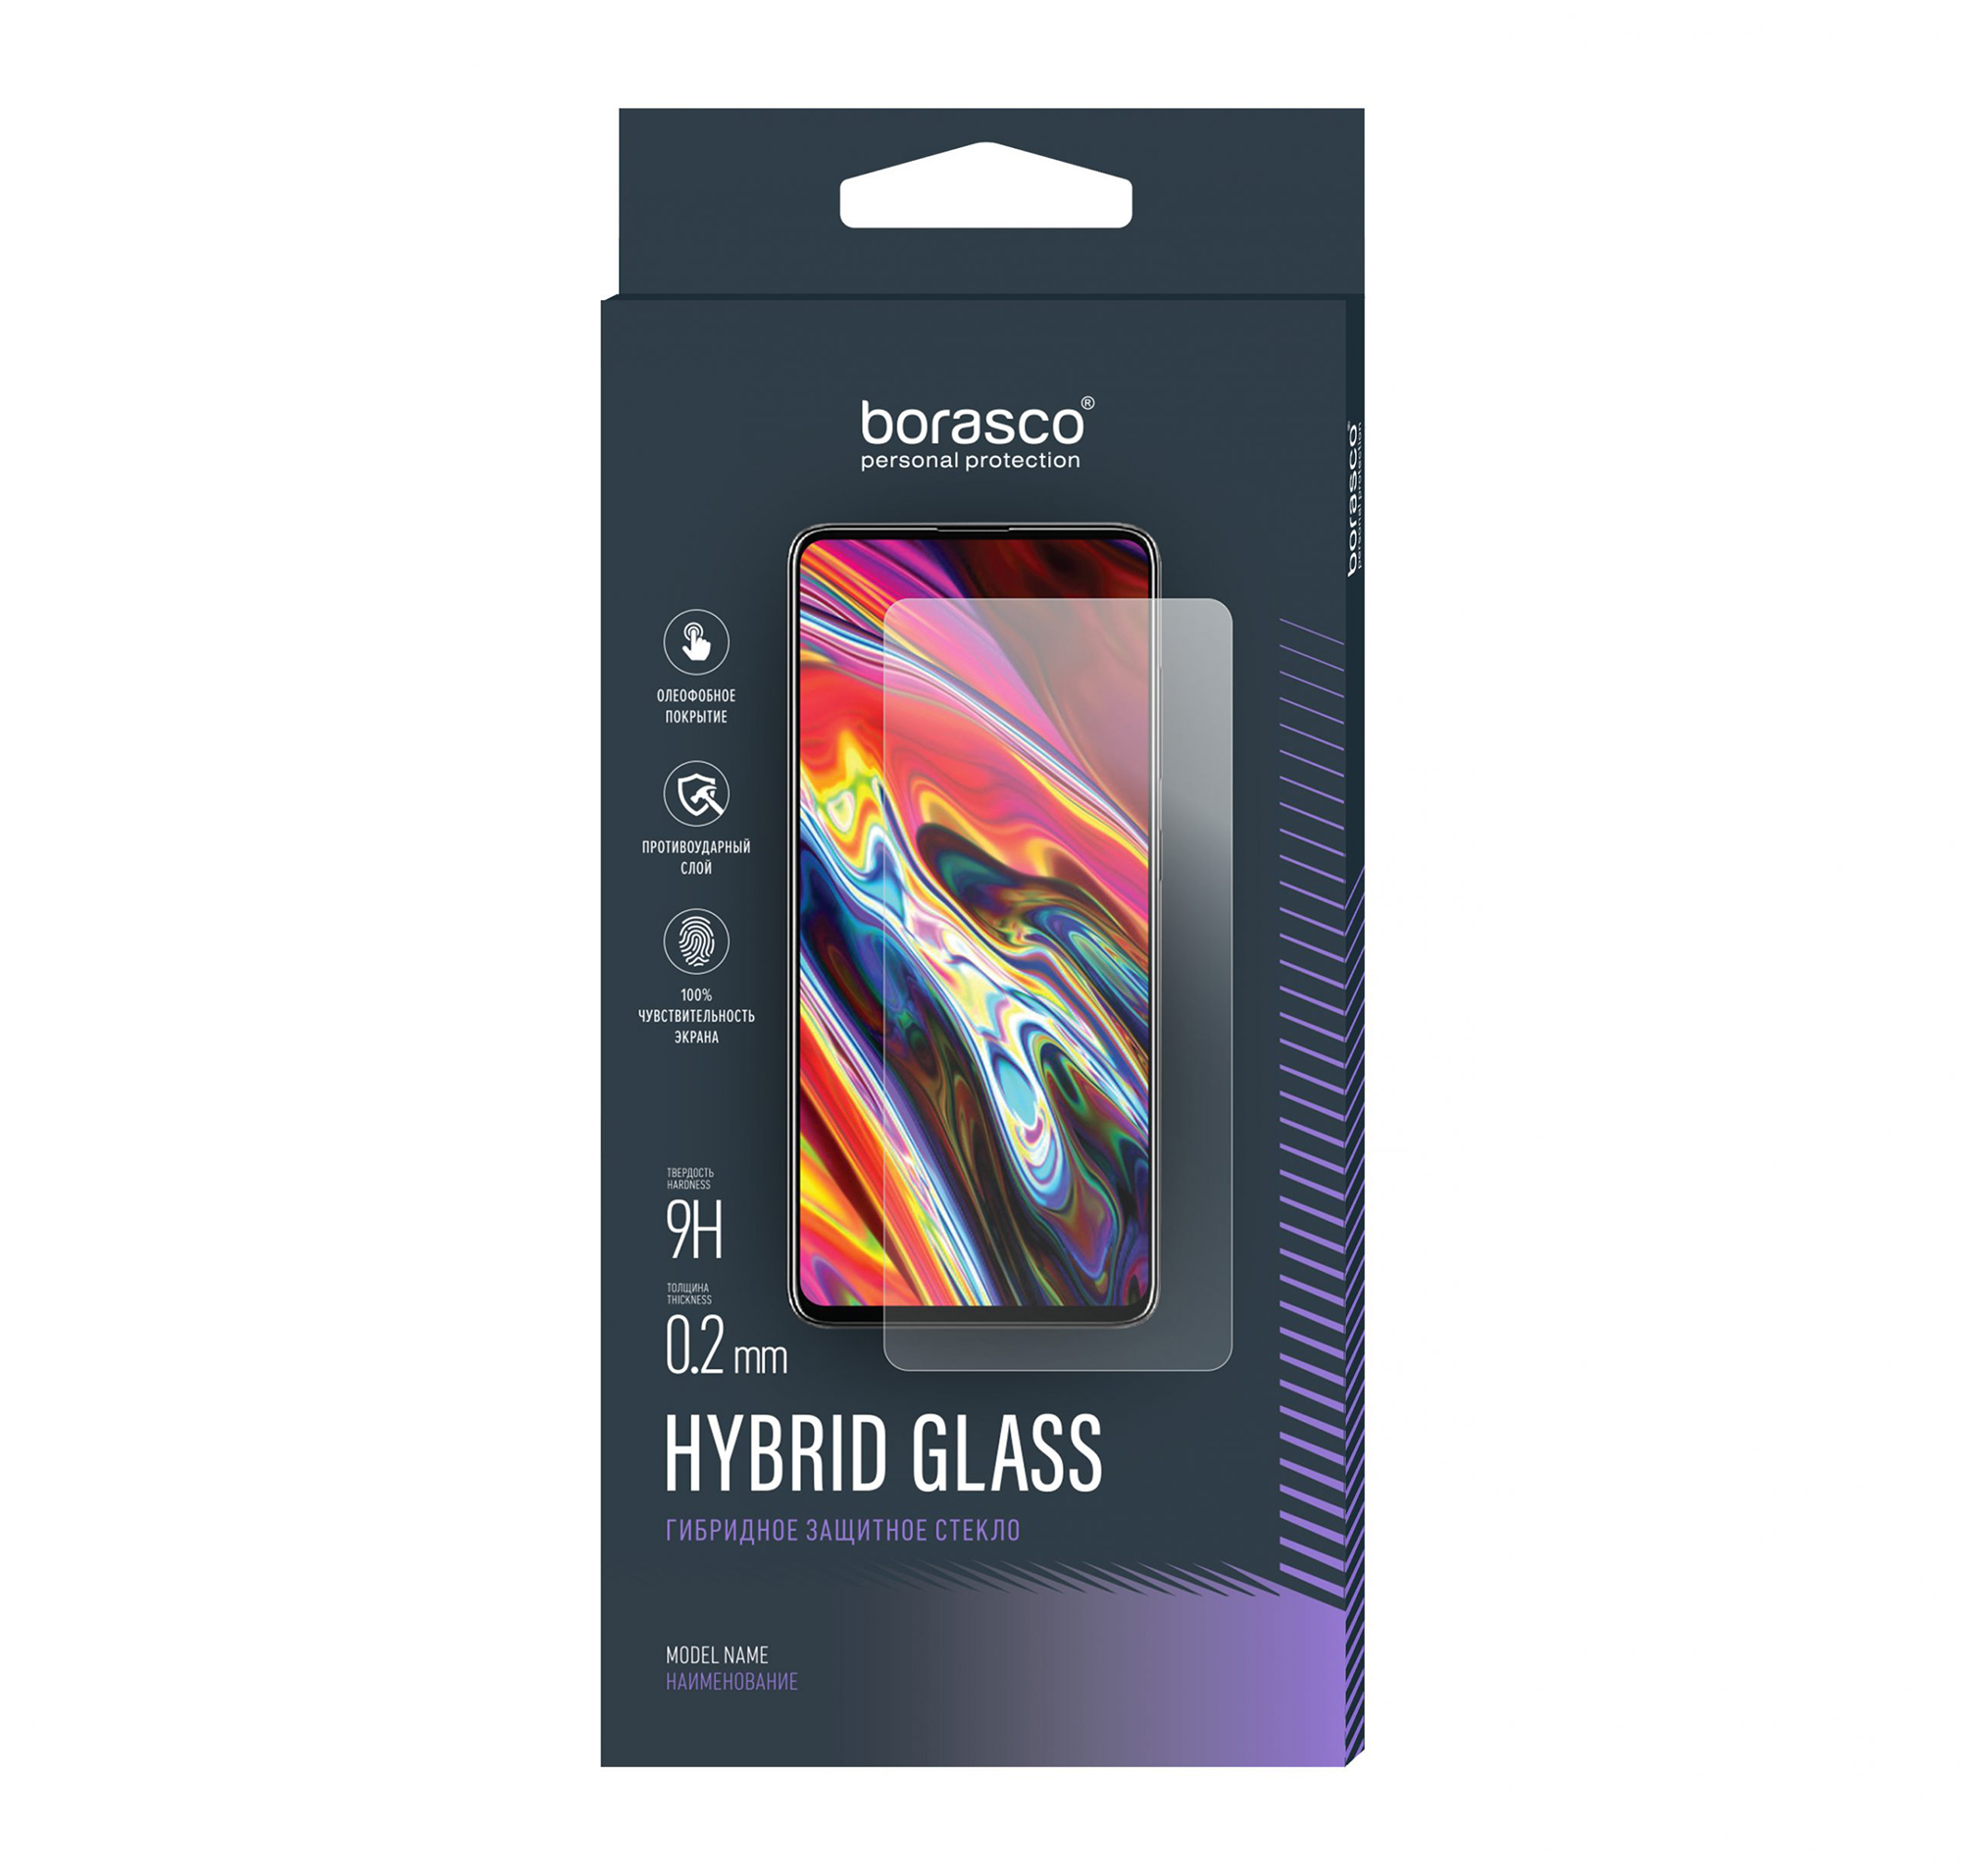 Защитное стекло Hybrid Glass для Apple iPad Pro 11 (2018/ 2020) защитное стекло redline для apple ipad air air2 pro 9 7 2018 1шт ут000005067